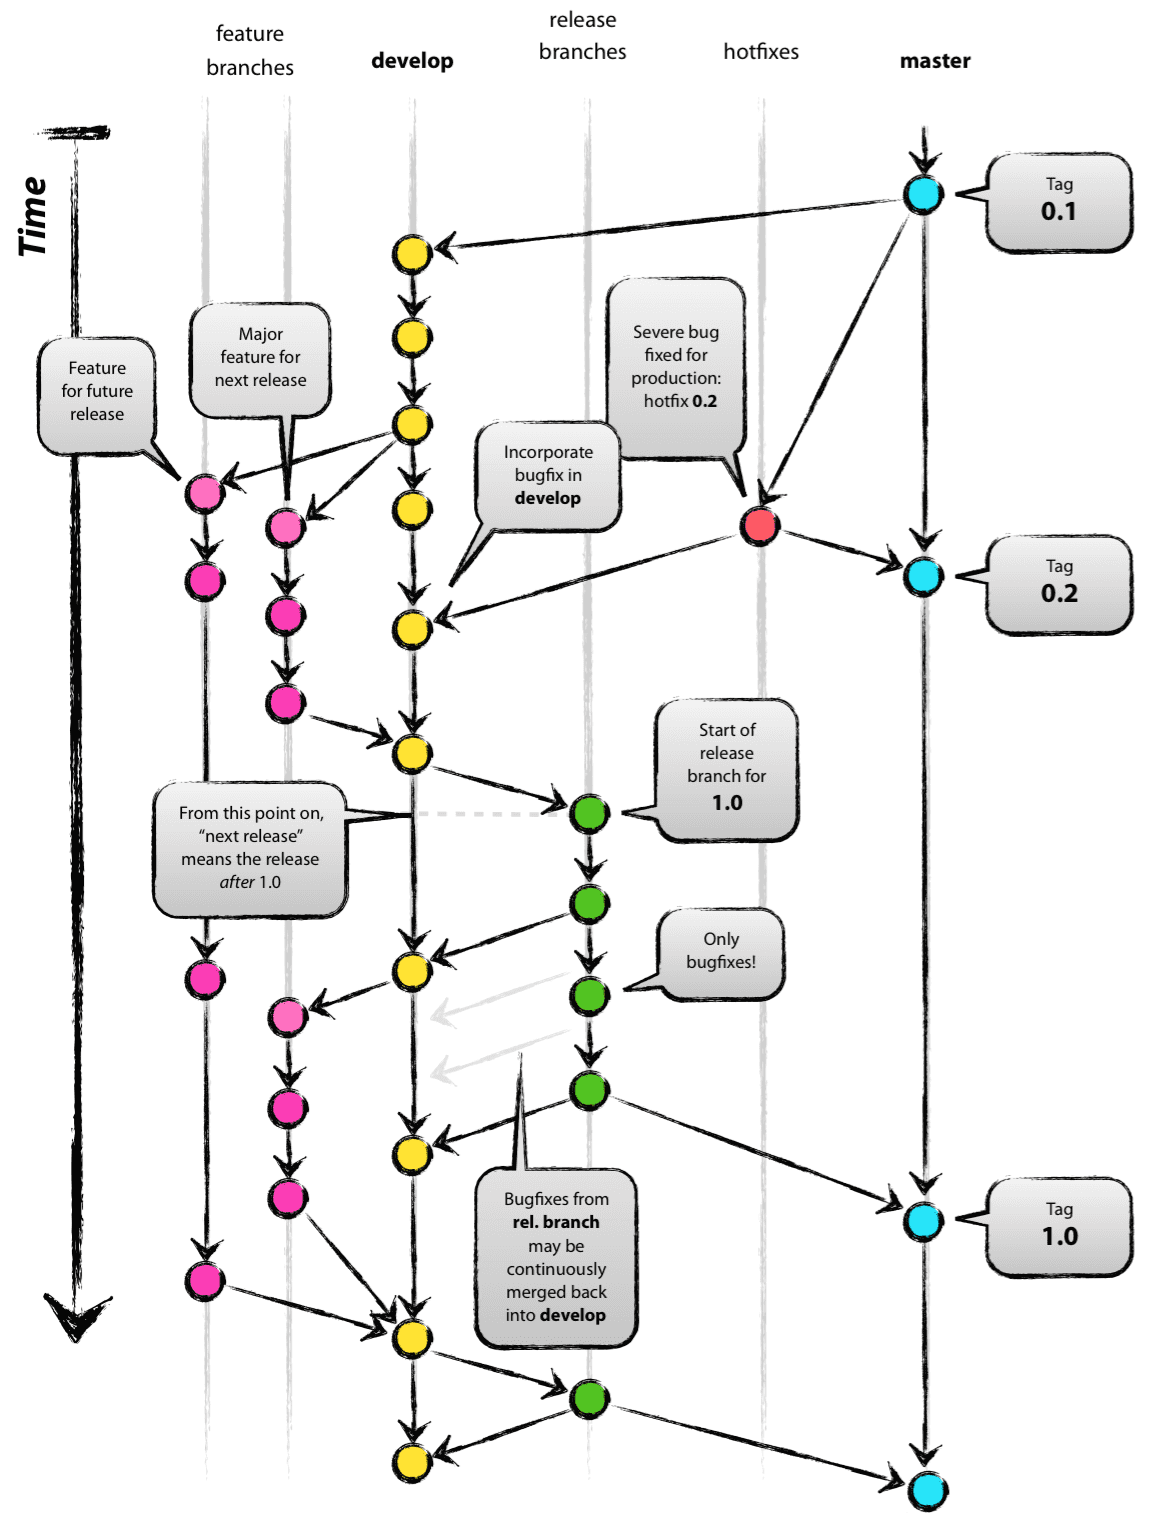 Gitflow branches model